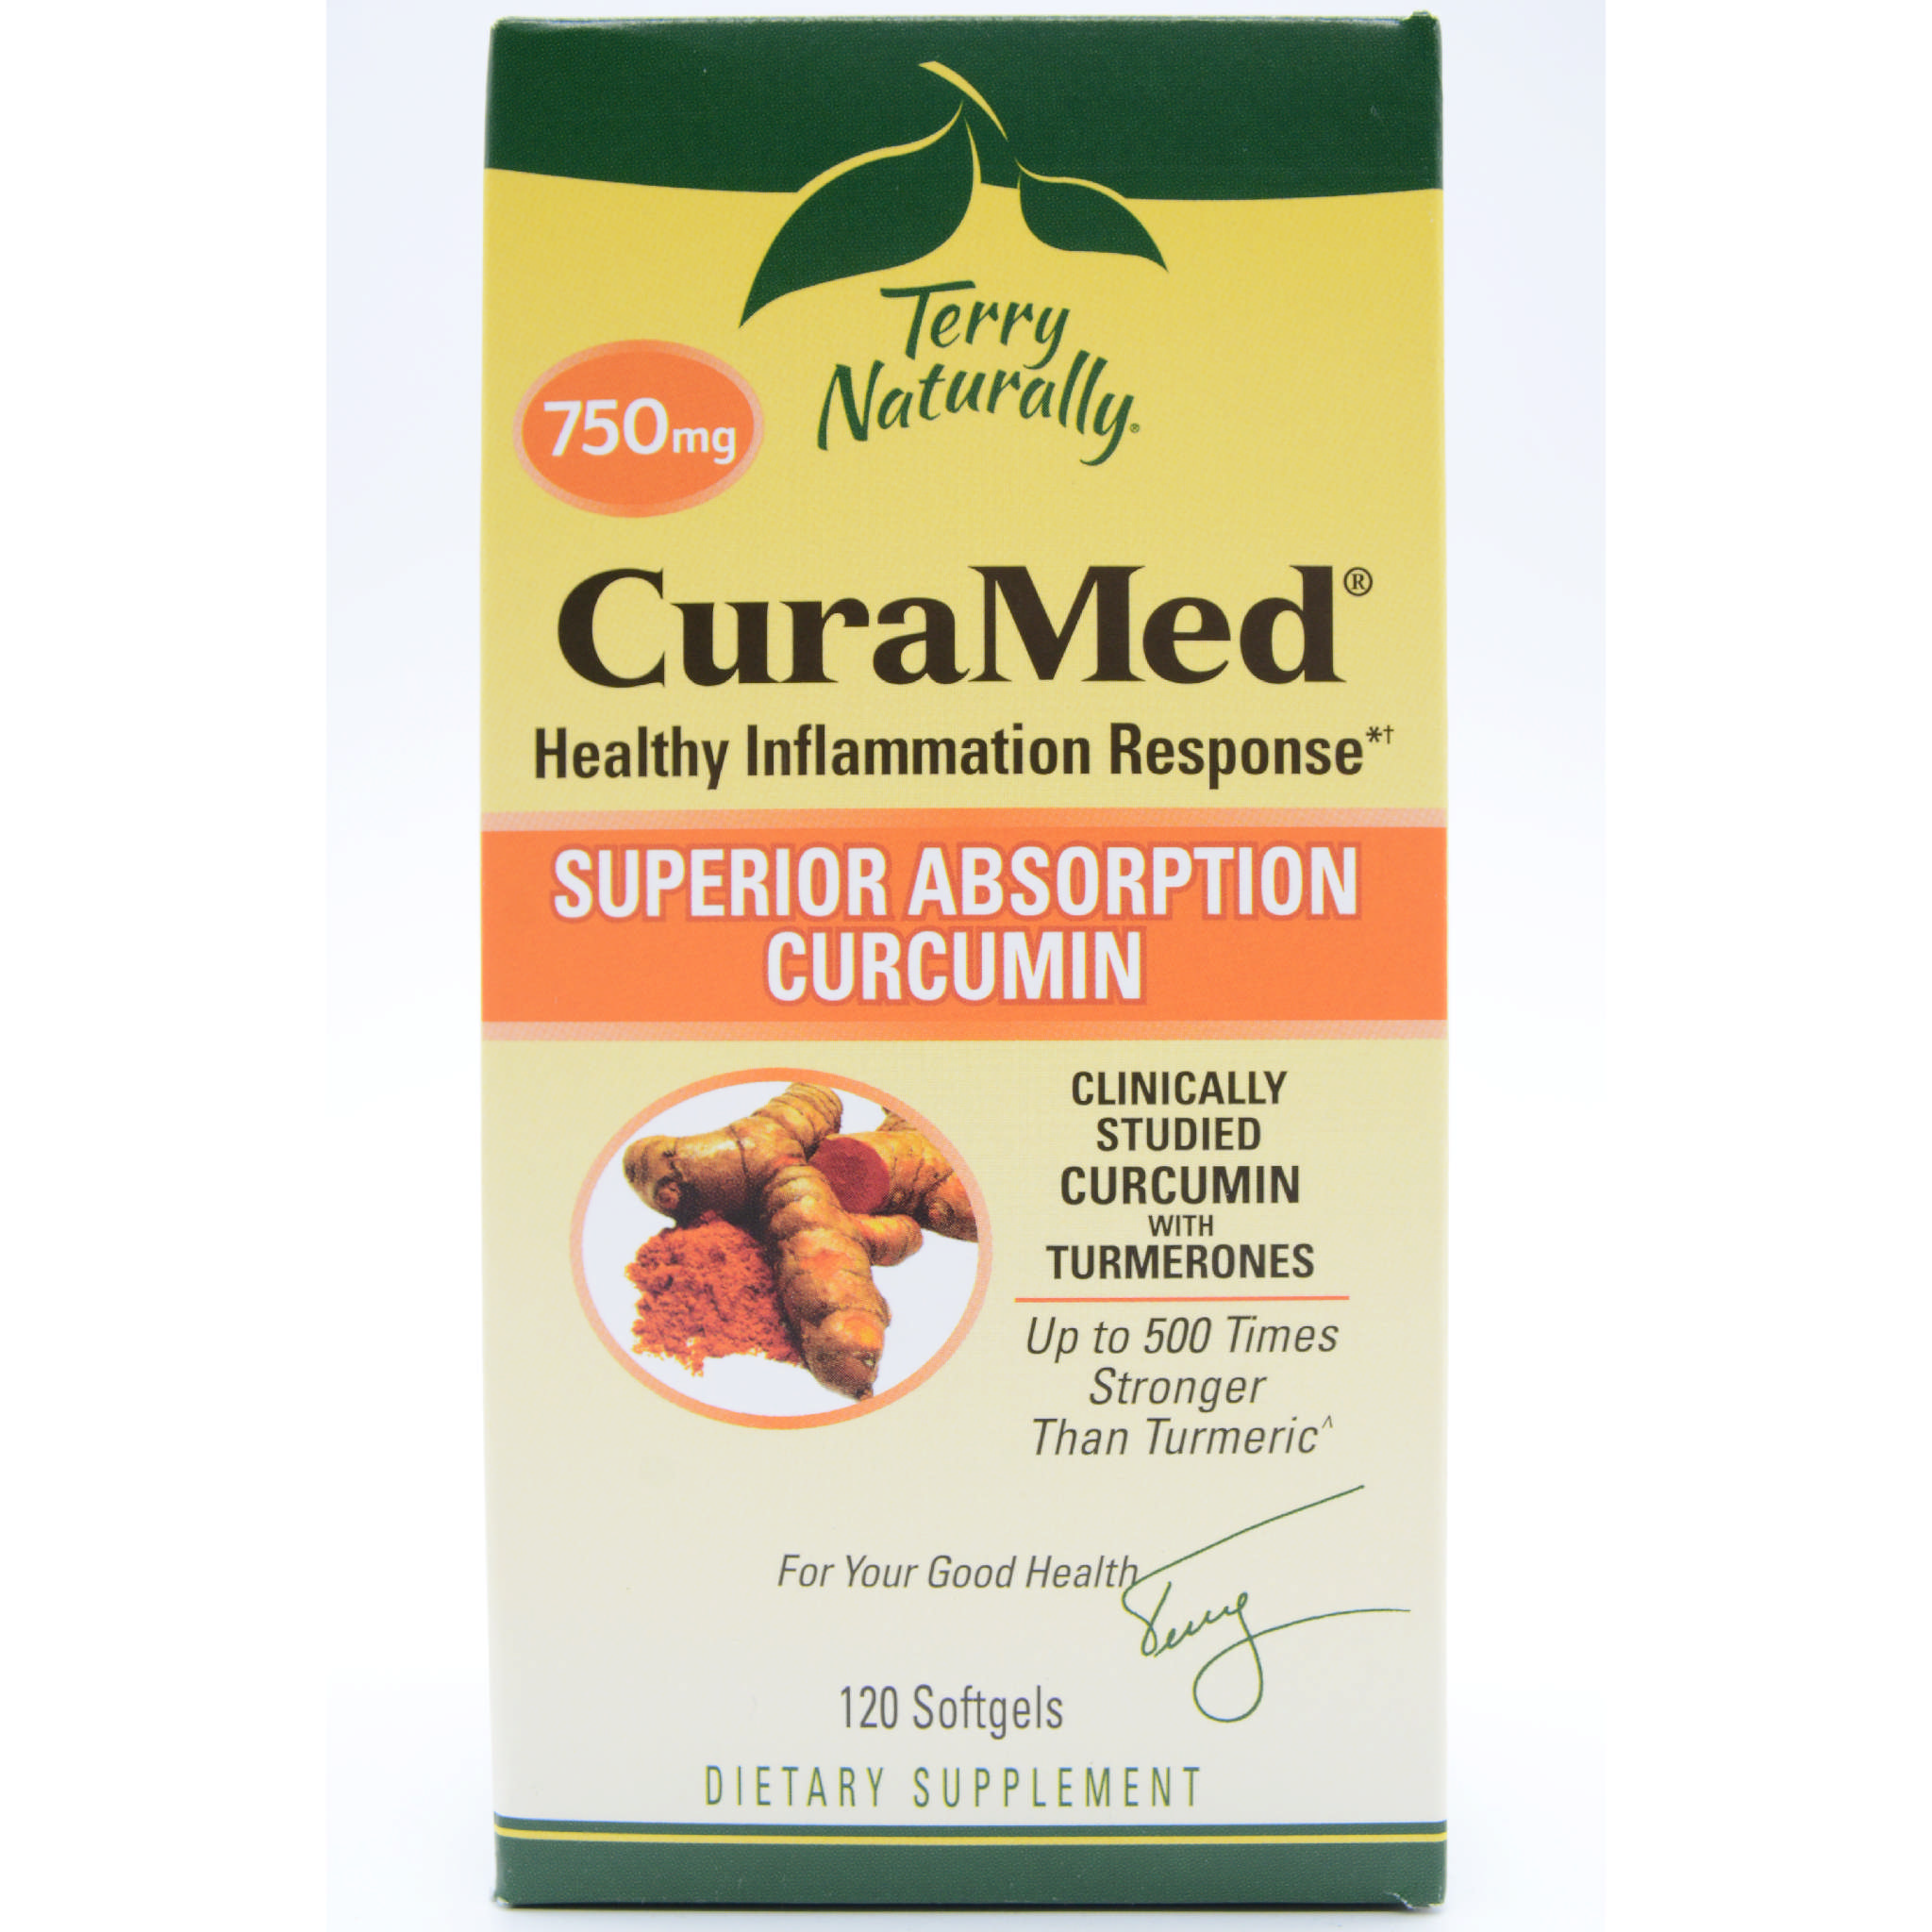 Terry Naturally - Curamed 750 mg Curcumin